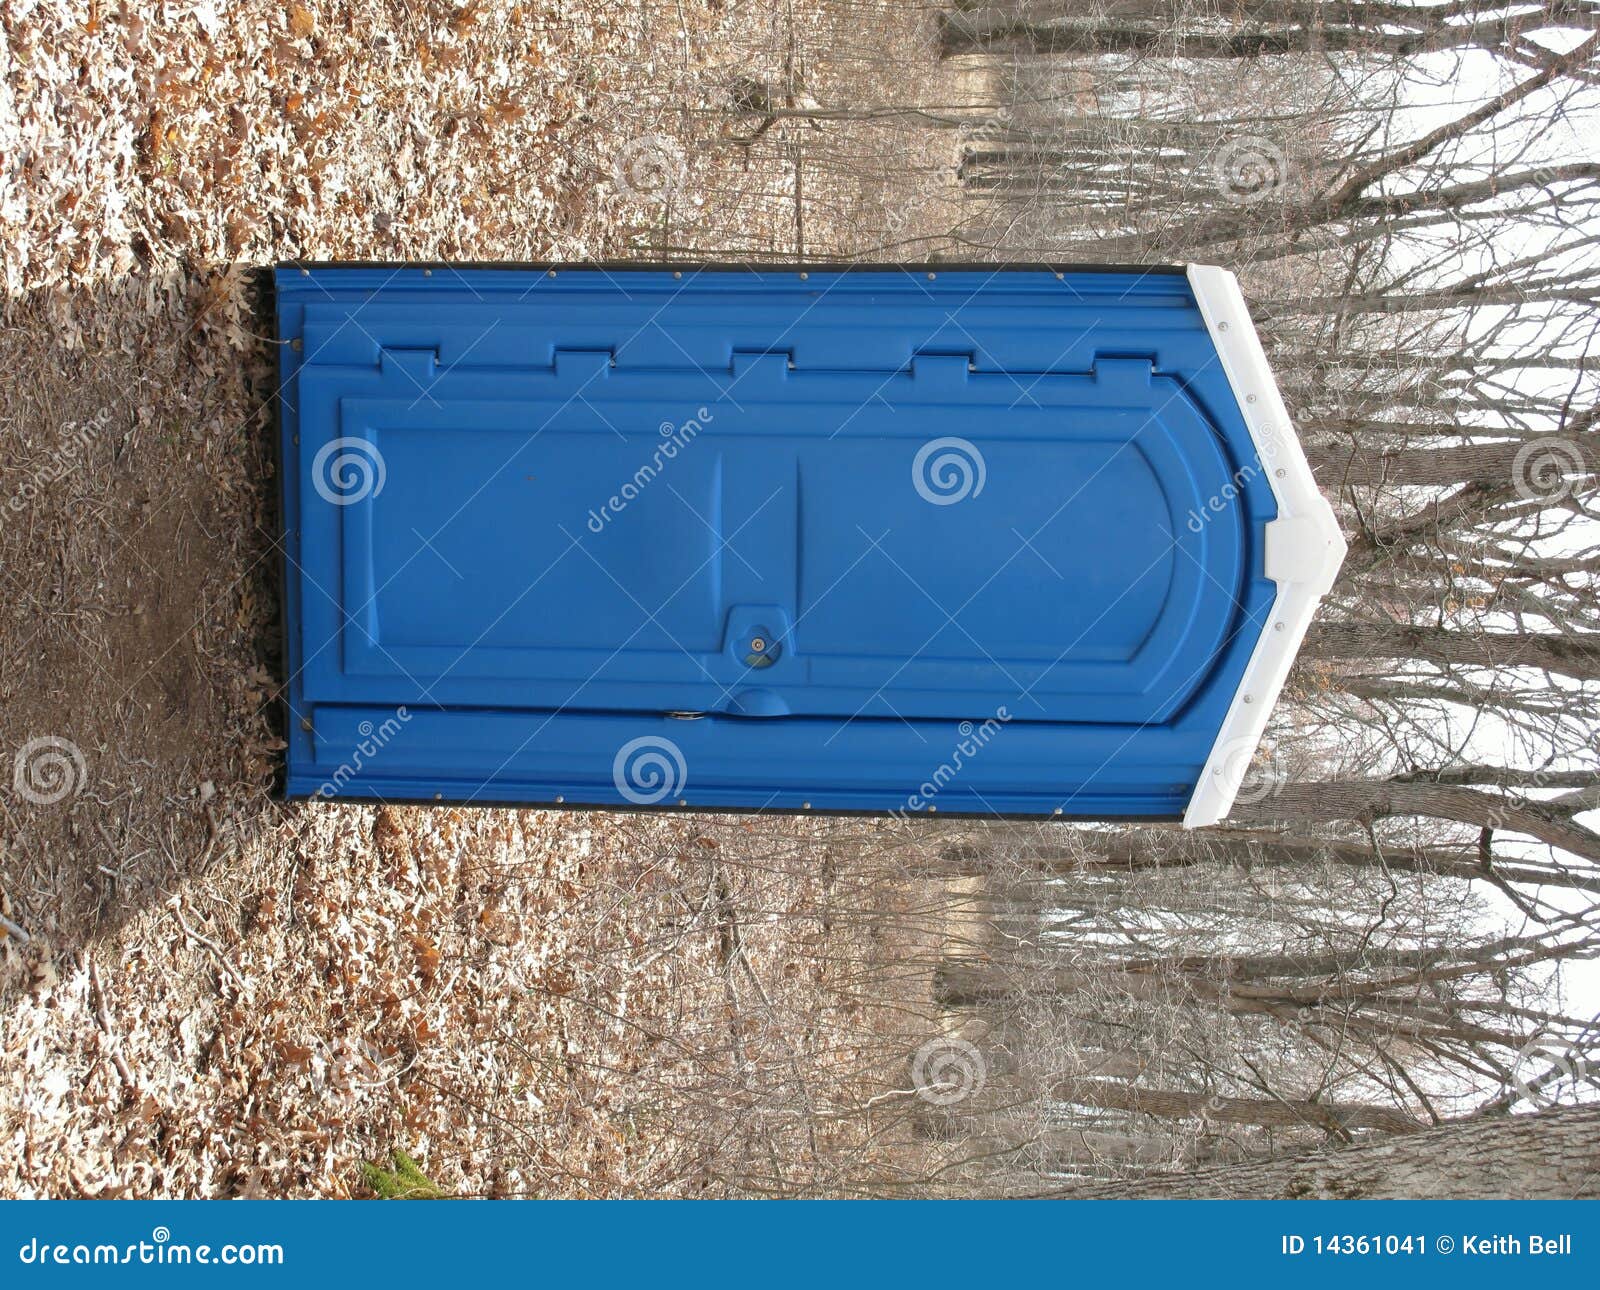 blue porta potty in a woods